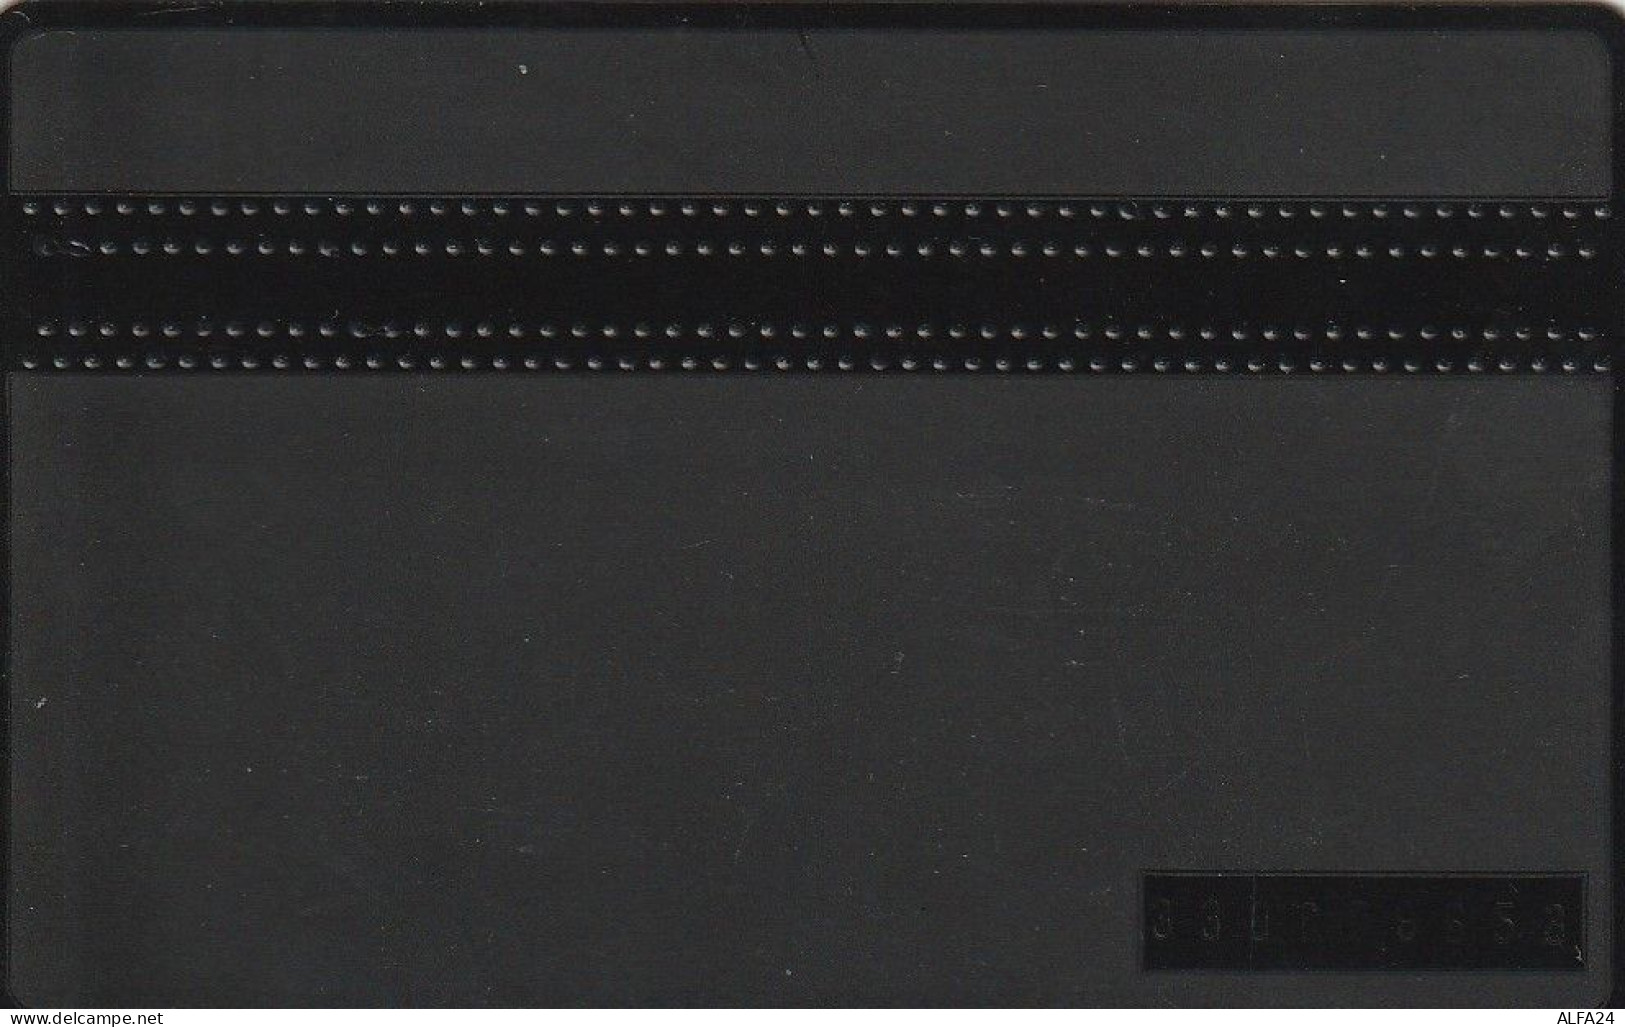 PHONE CARD BELGIO LG (CV6619 - Senza Chip